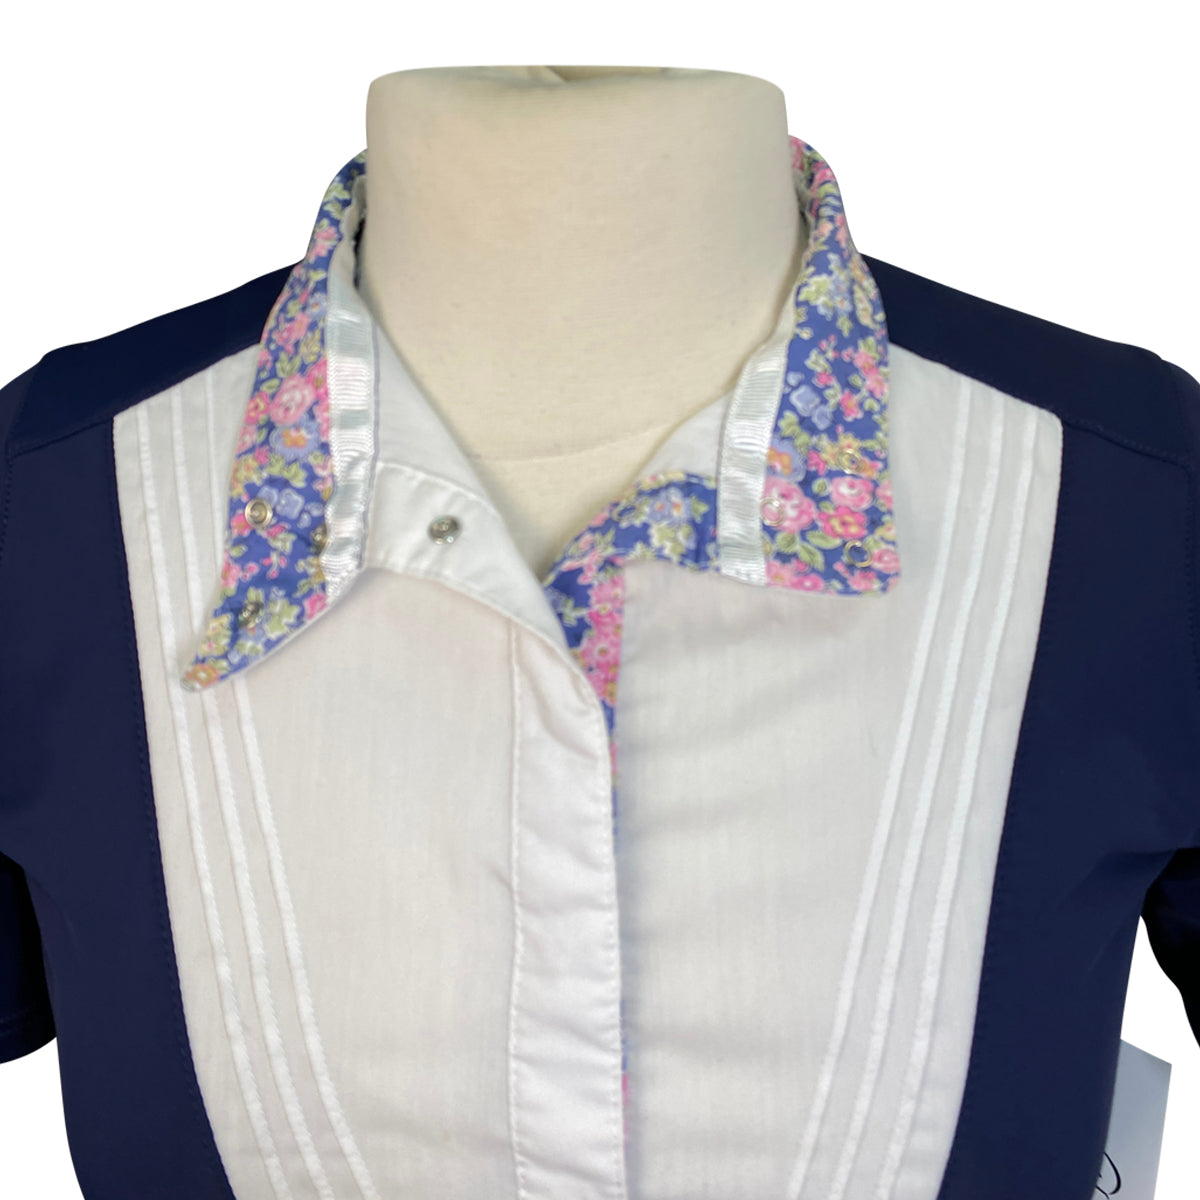 Fior Da Liso 'Alisa' Shirt in Navy w/Floral Pattern